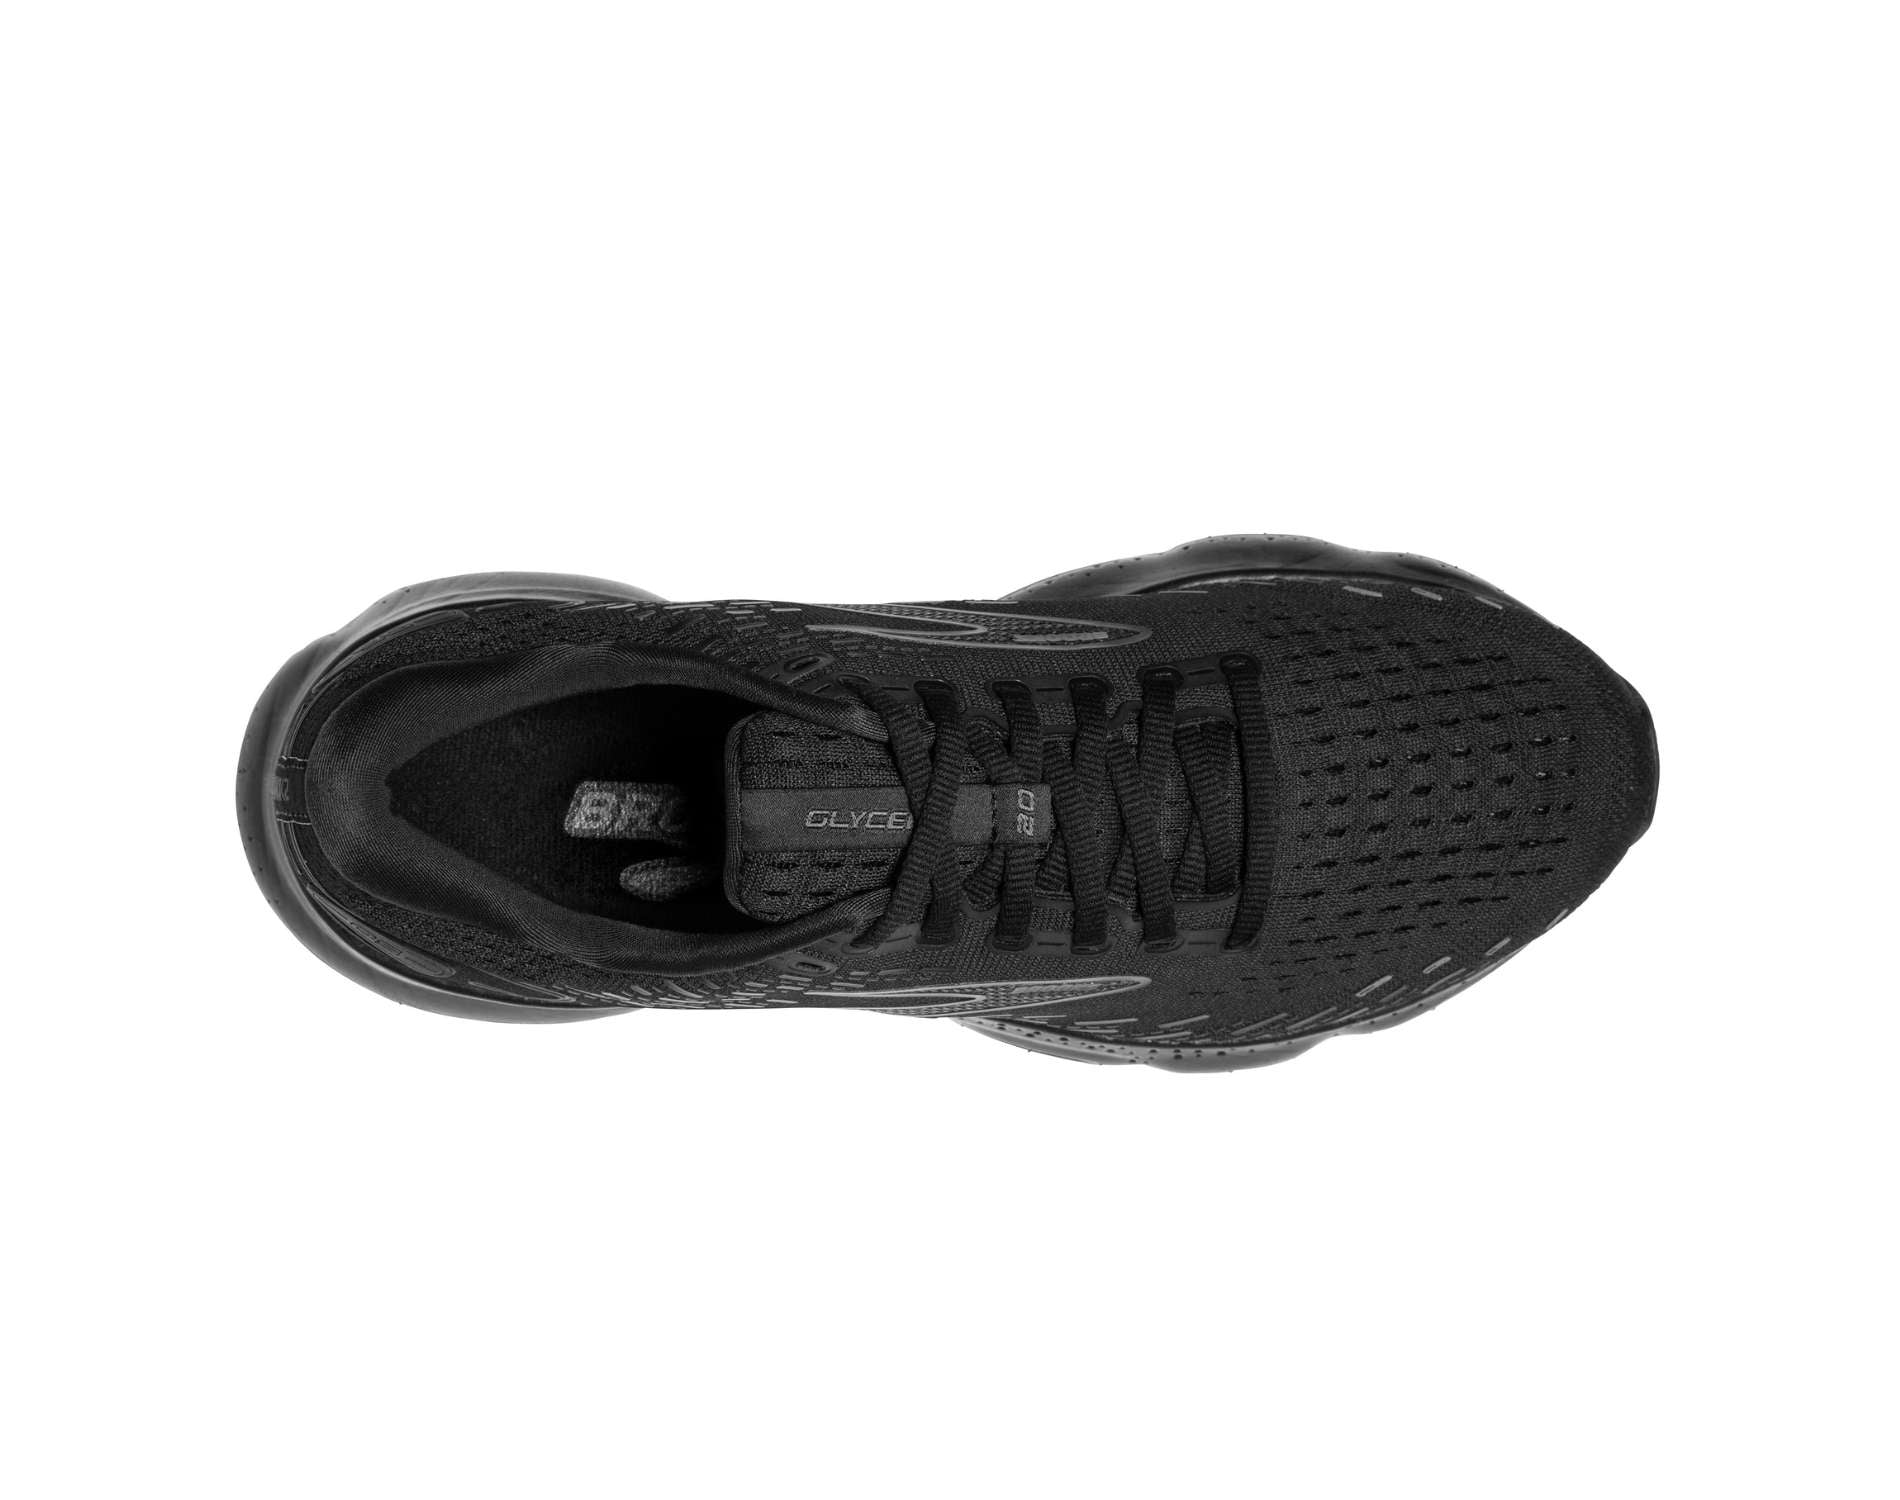 Brooks Glycerin 20 in b width womens running shoe in black colour